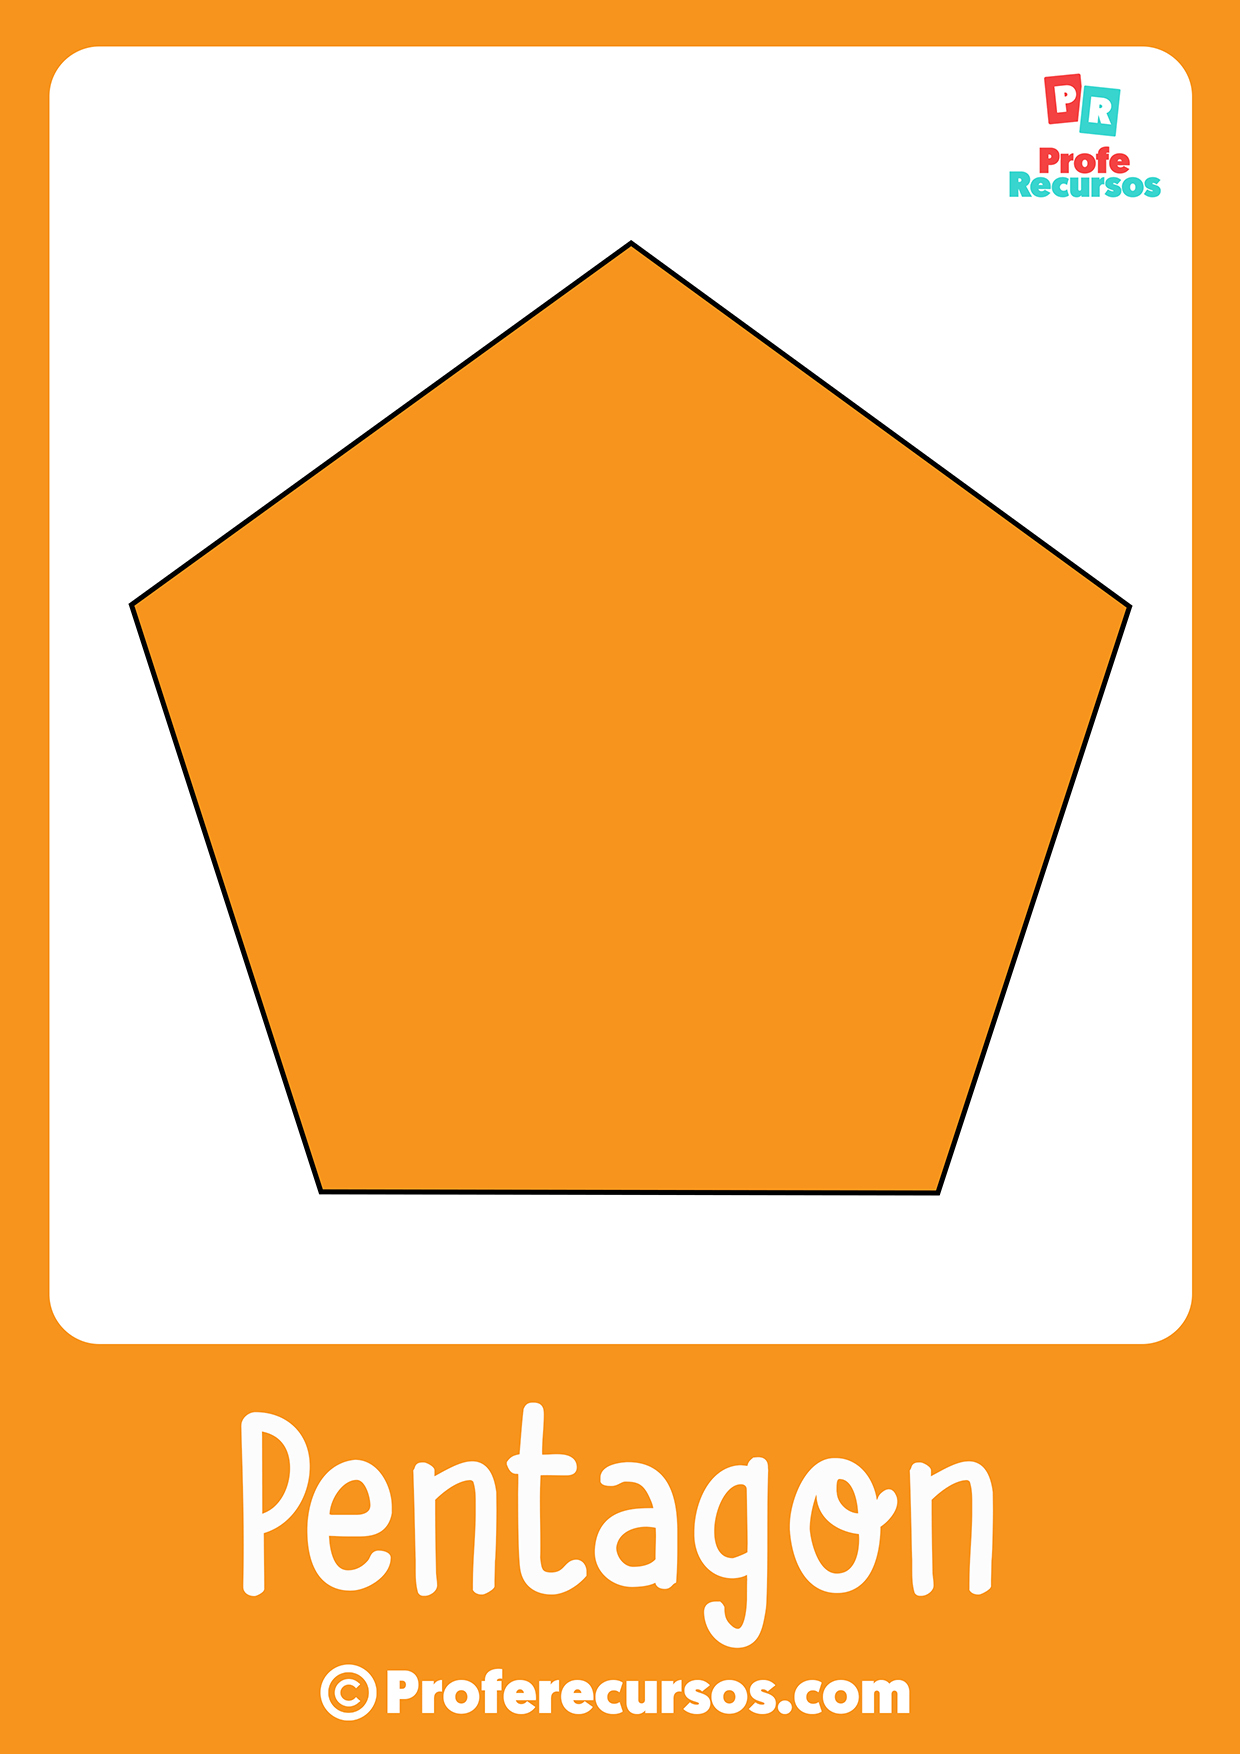 Pentagon shape